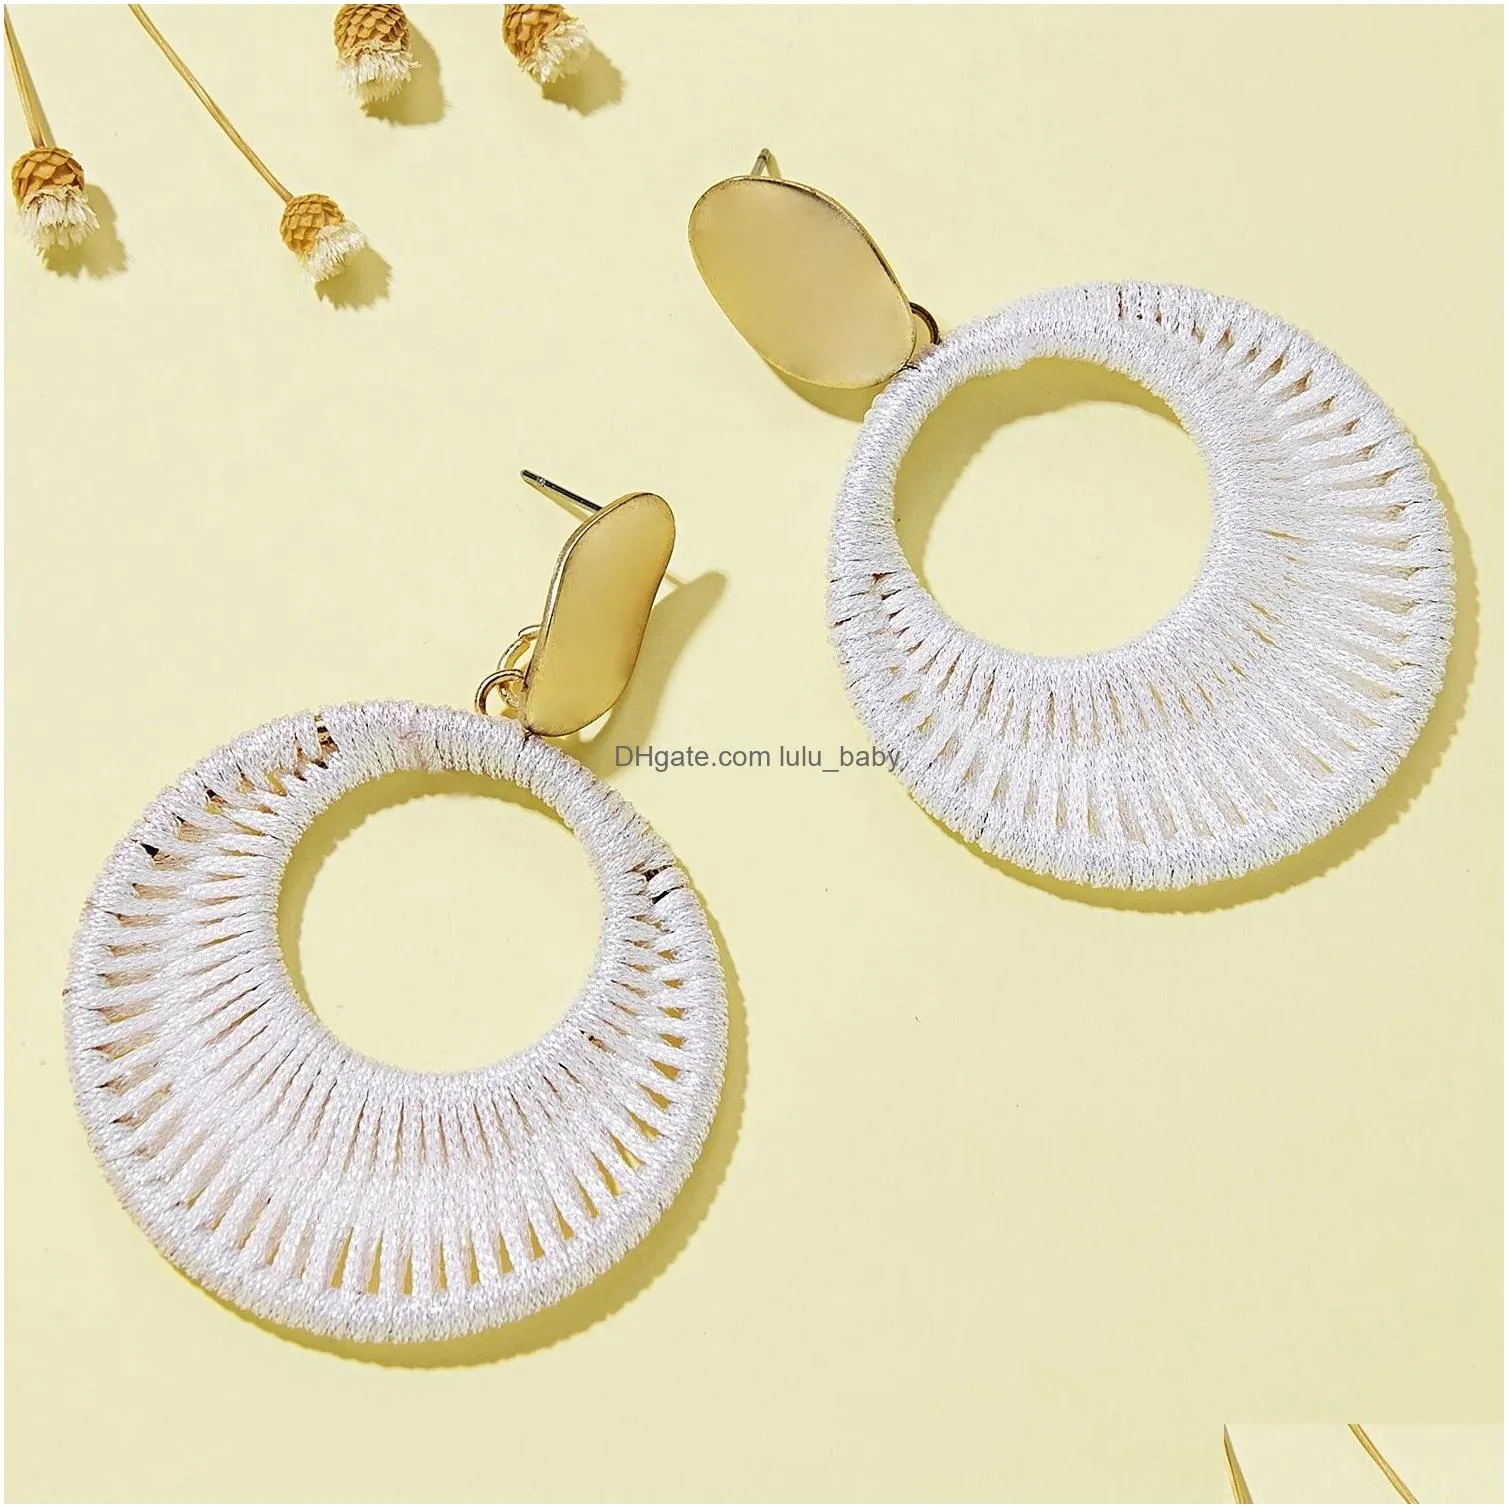 vintage elegant big round earrings boho hand woven geometry circle earrings for women ethnic statement earrings jewelry brincos